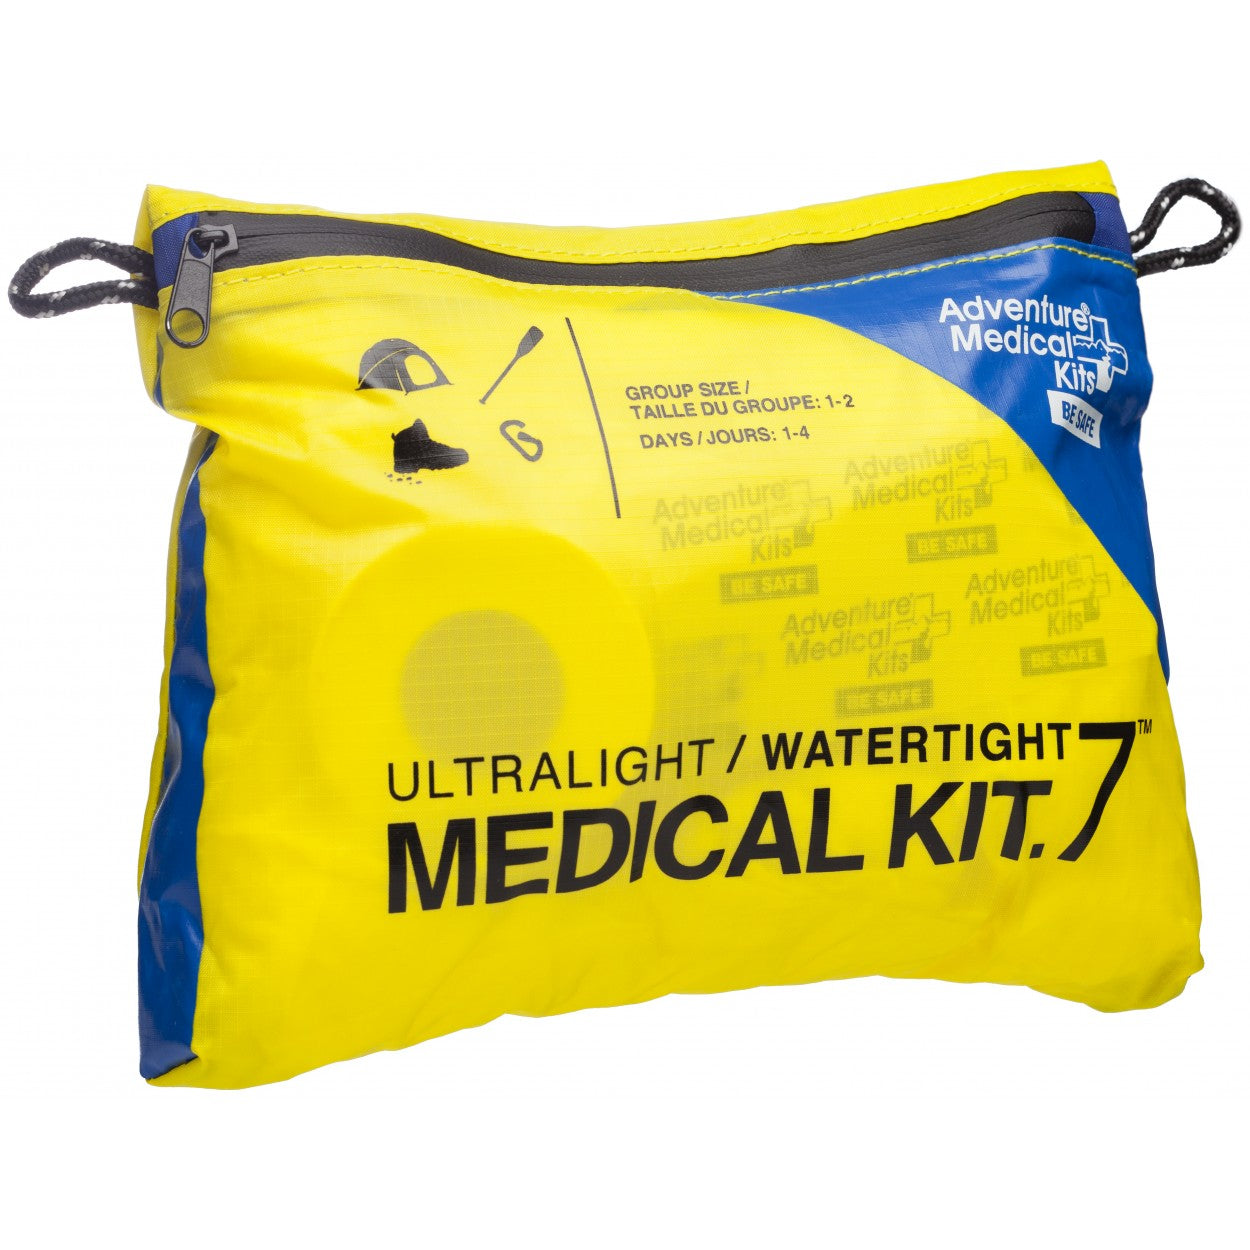 Ultralight & Watertight Medical Kits